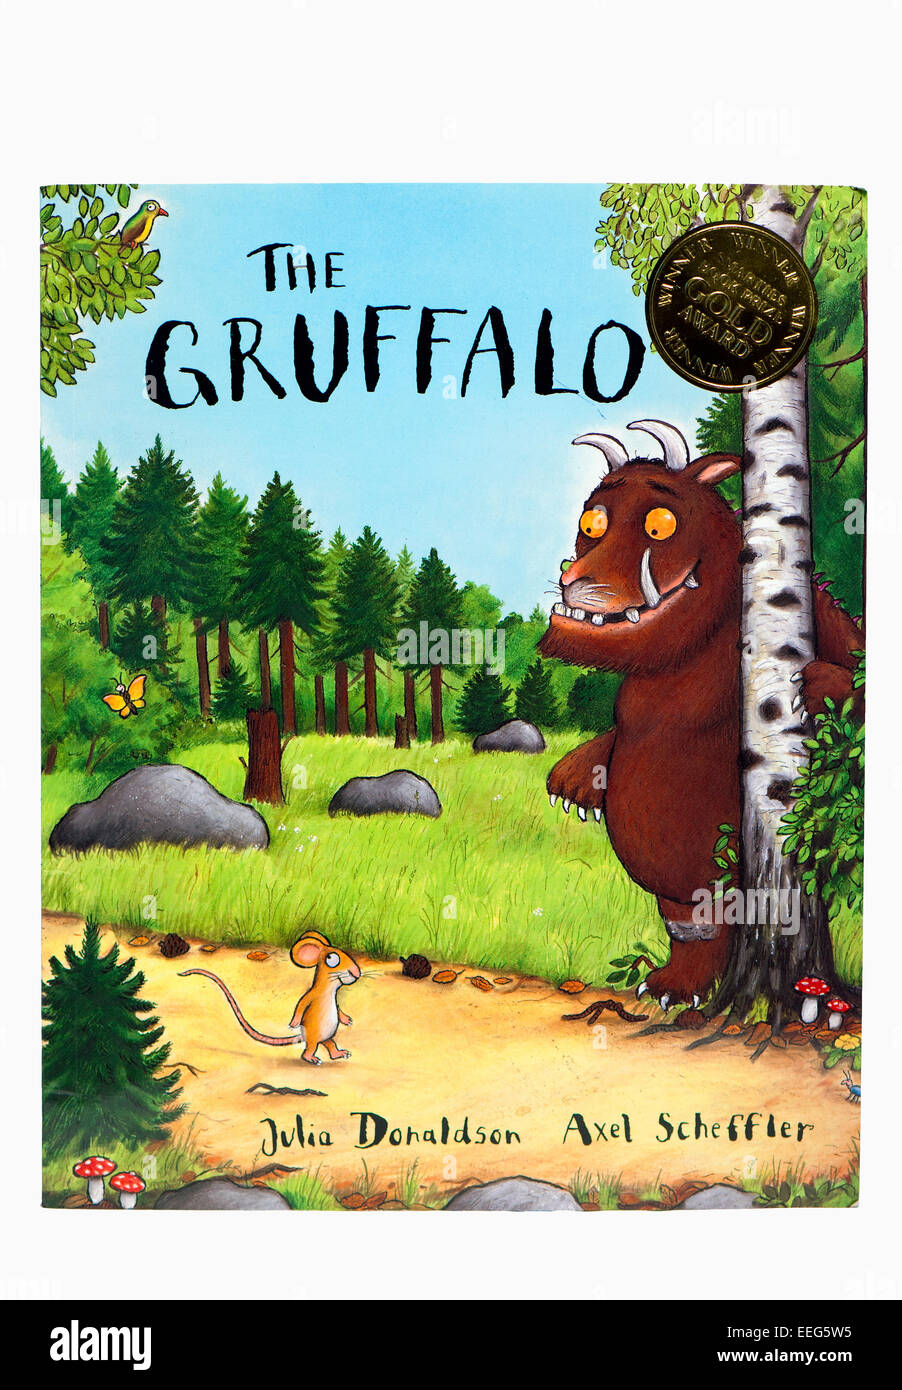 The Gruffalo by Julia Donaldson and Axel Scheffler Stock Photo